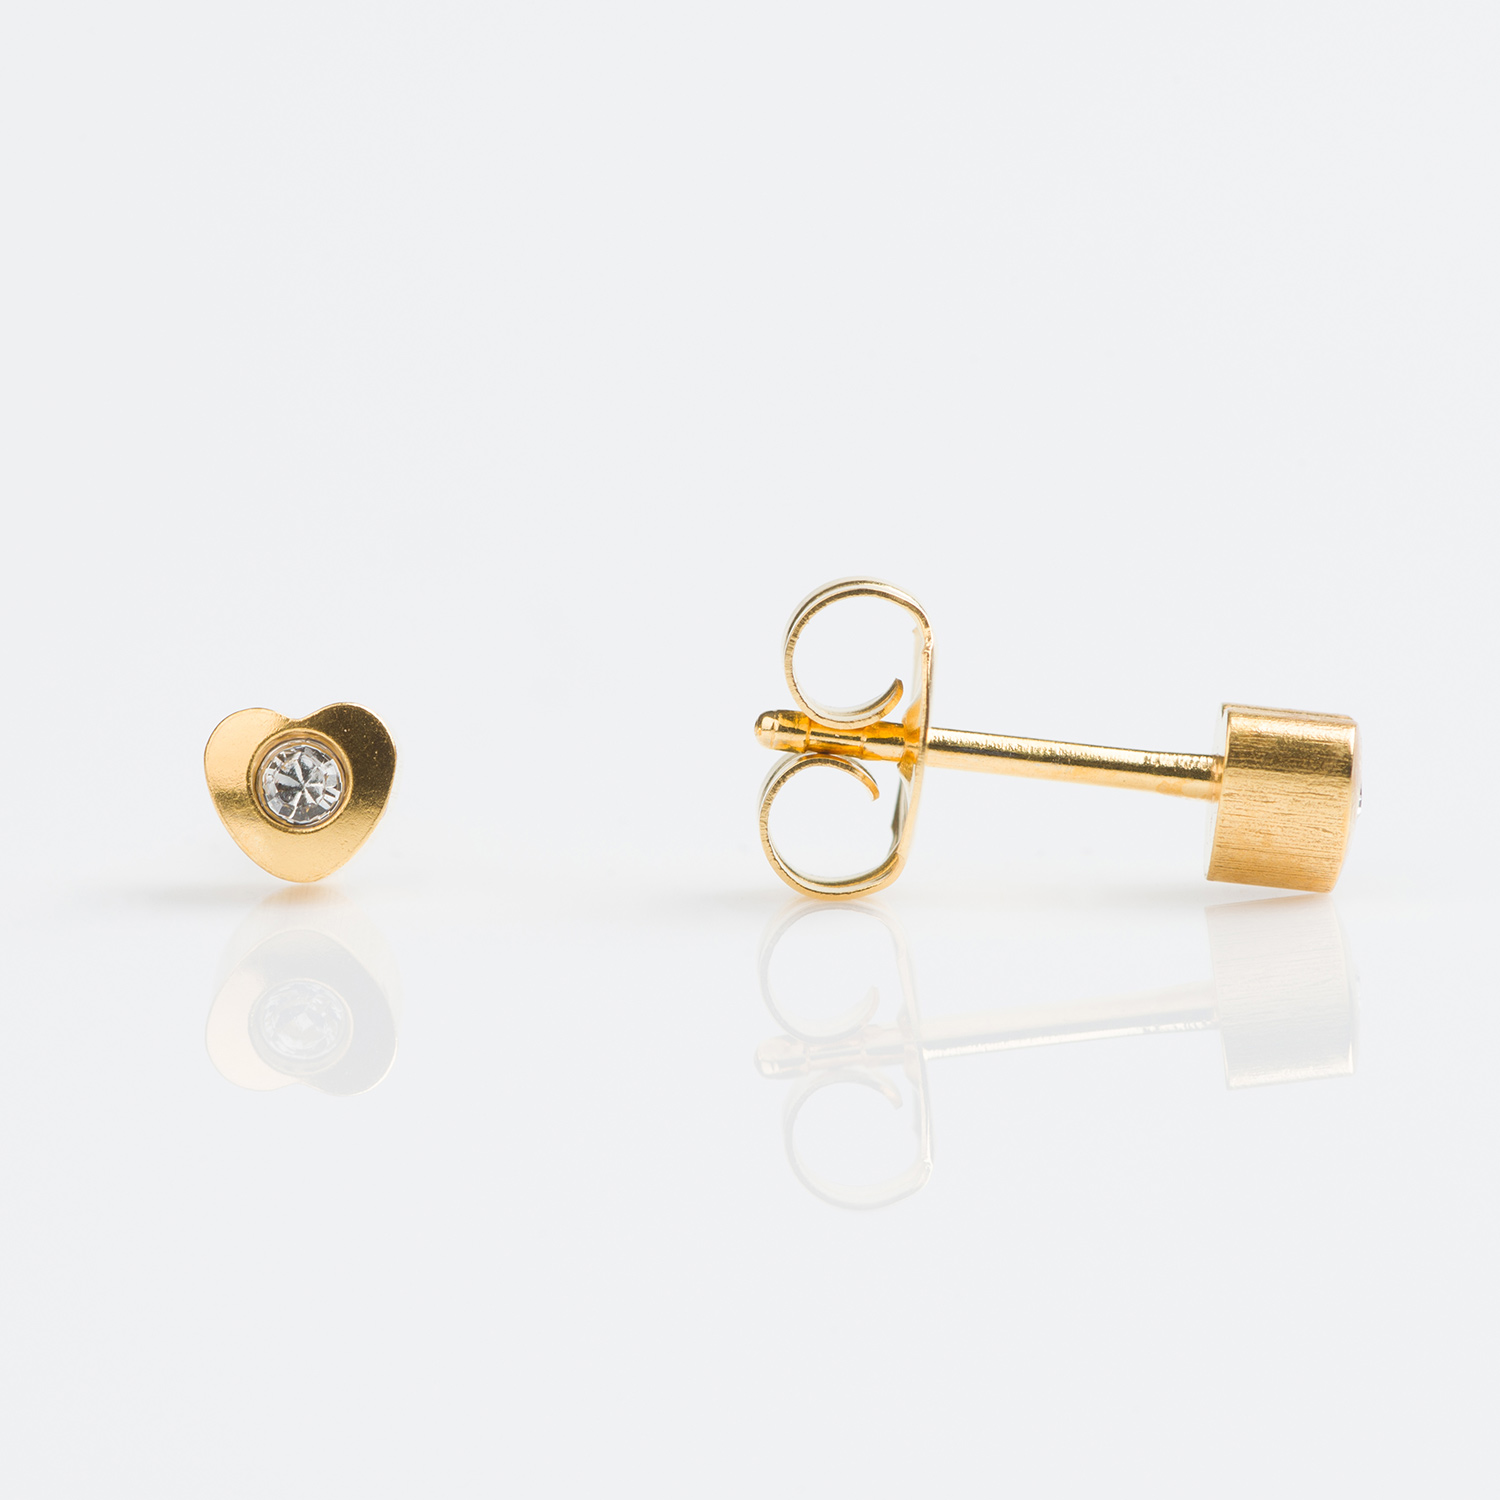 TT-5024 – Studex Tiny Tips Gold Plated 4mm Heartlite April Crystal Stud Earrings